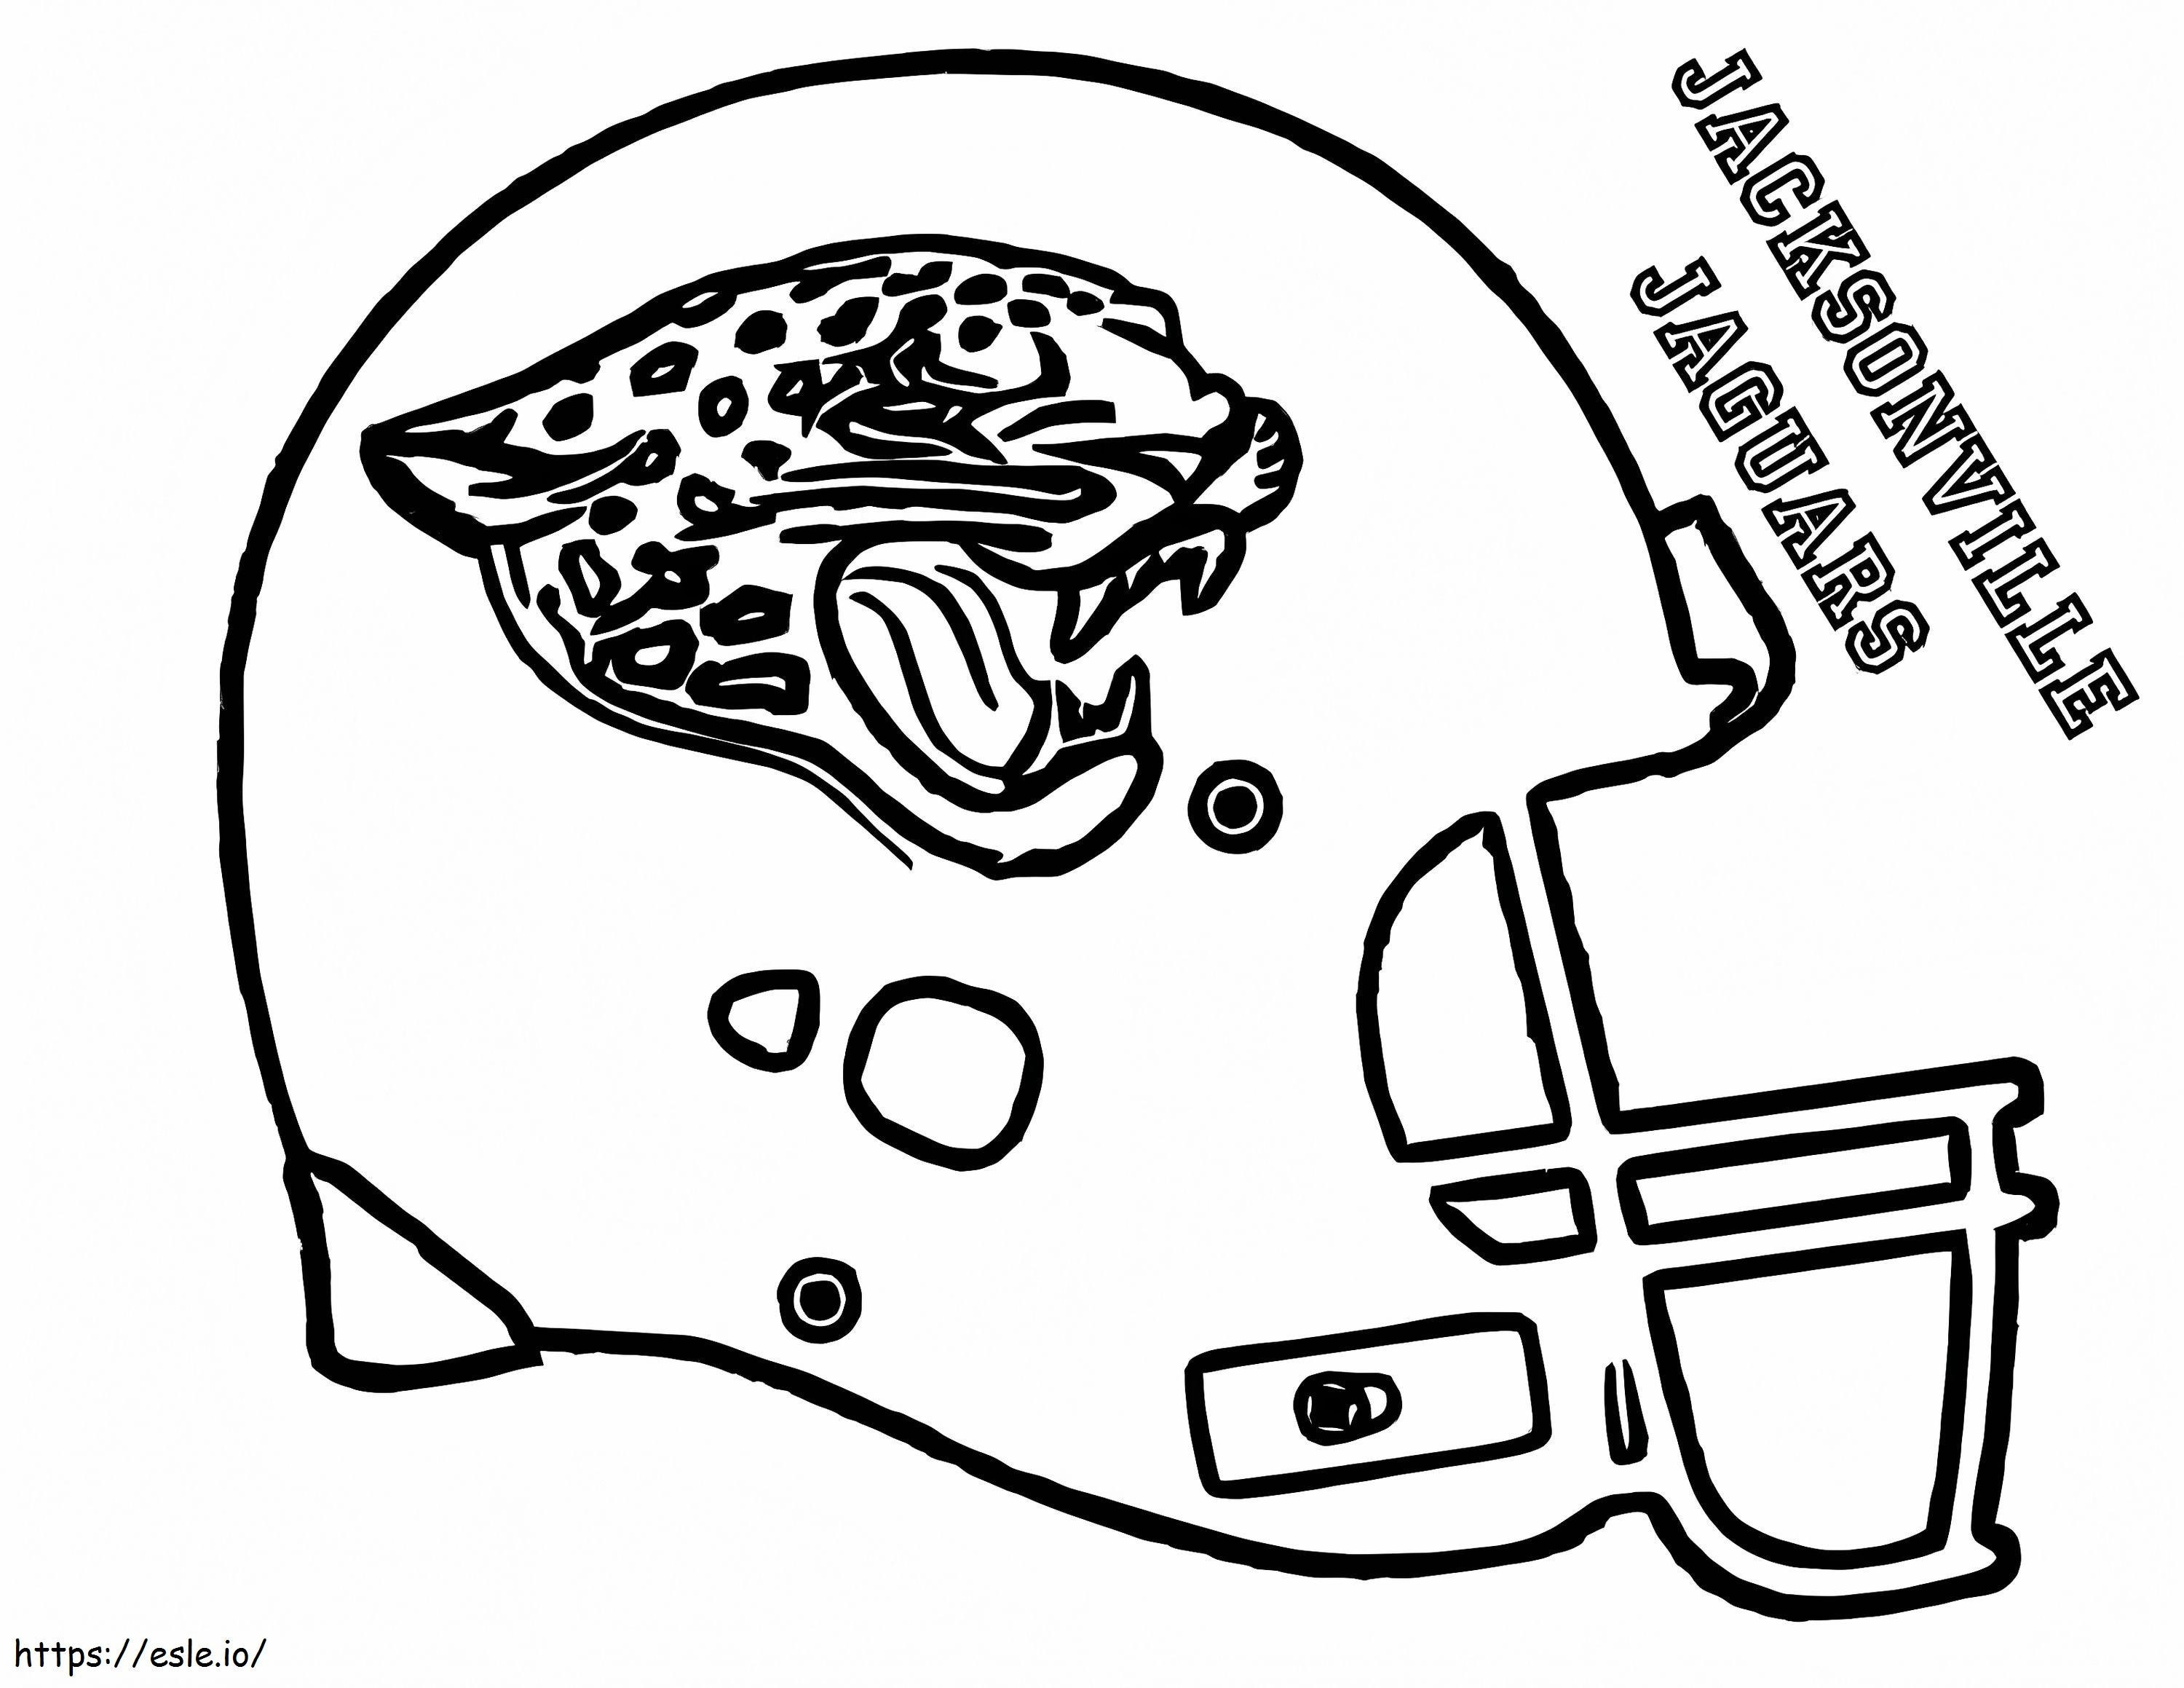 Jacksonville Jaguars coloring page